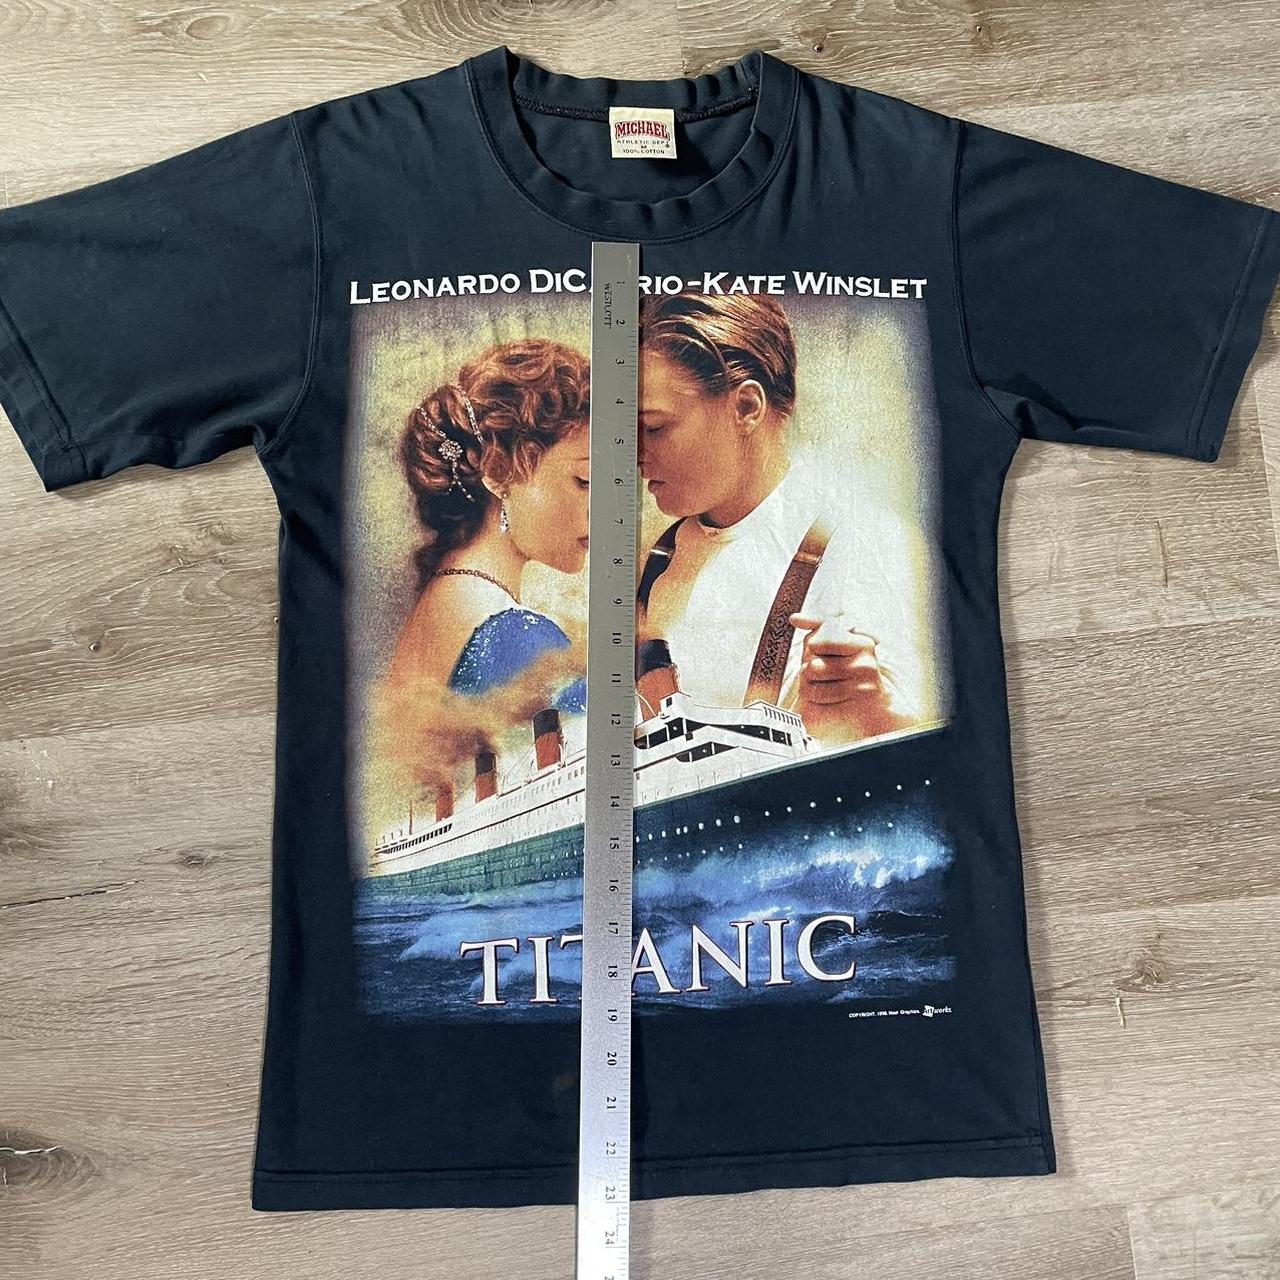 Titanic - New Vintage Movie T shirt - Vintage Band Shirts